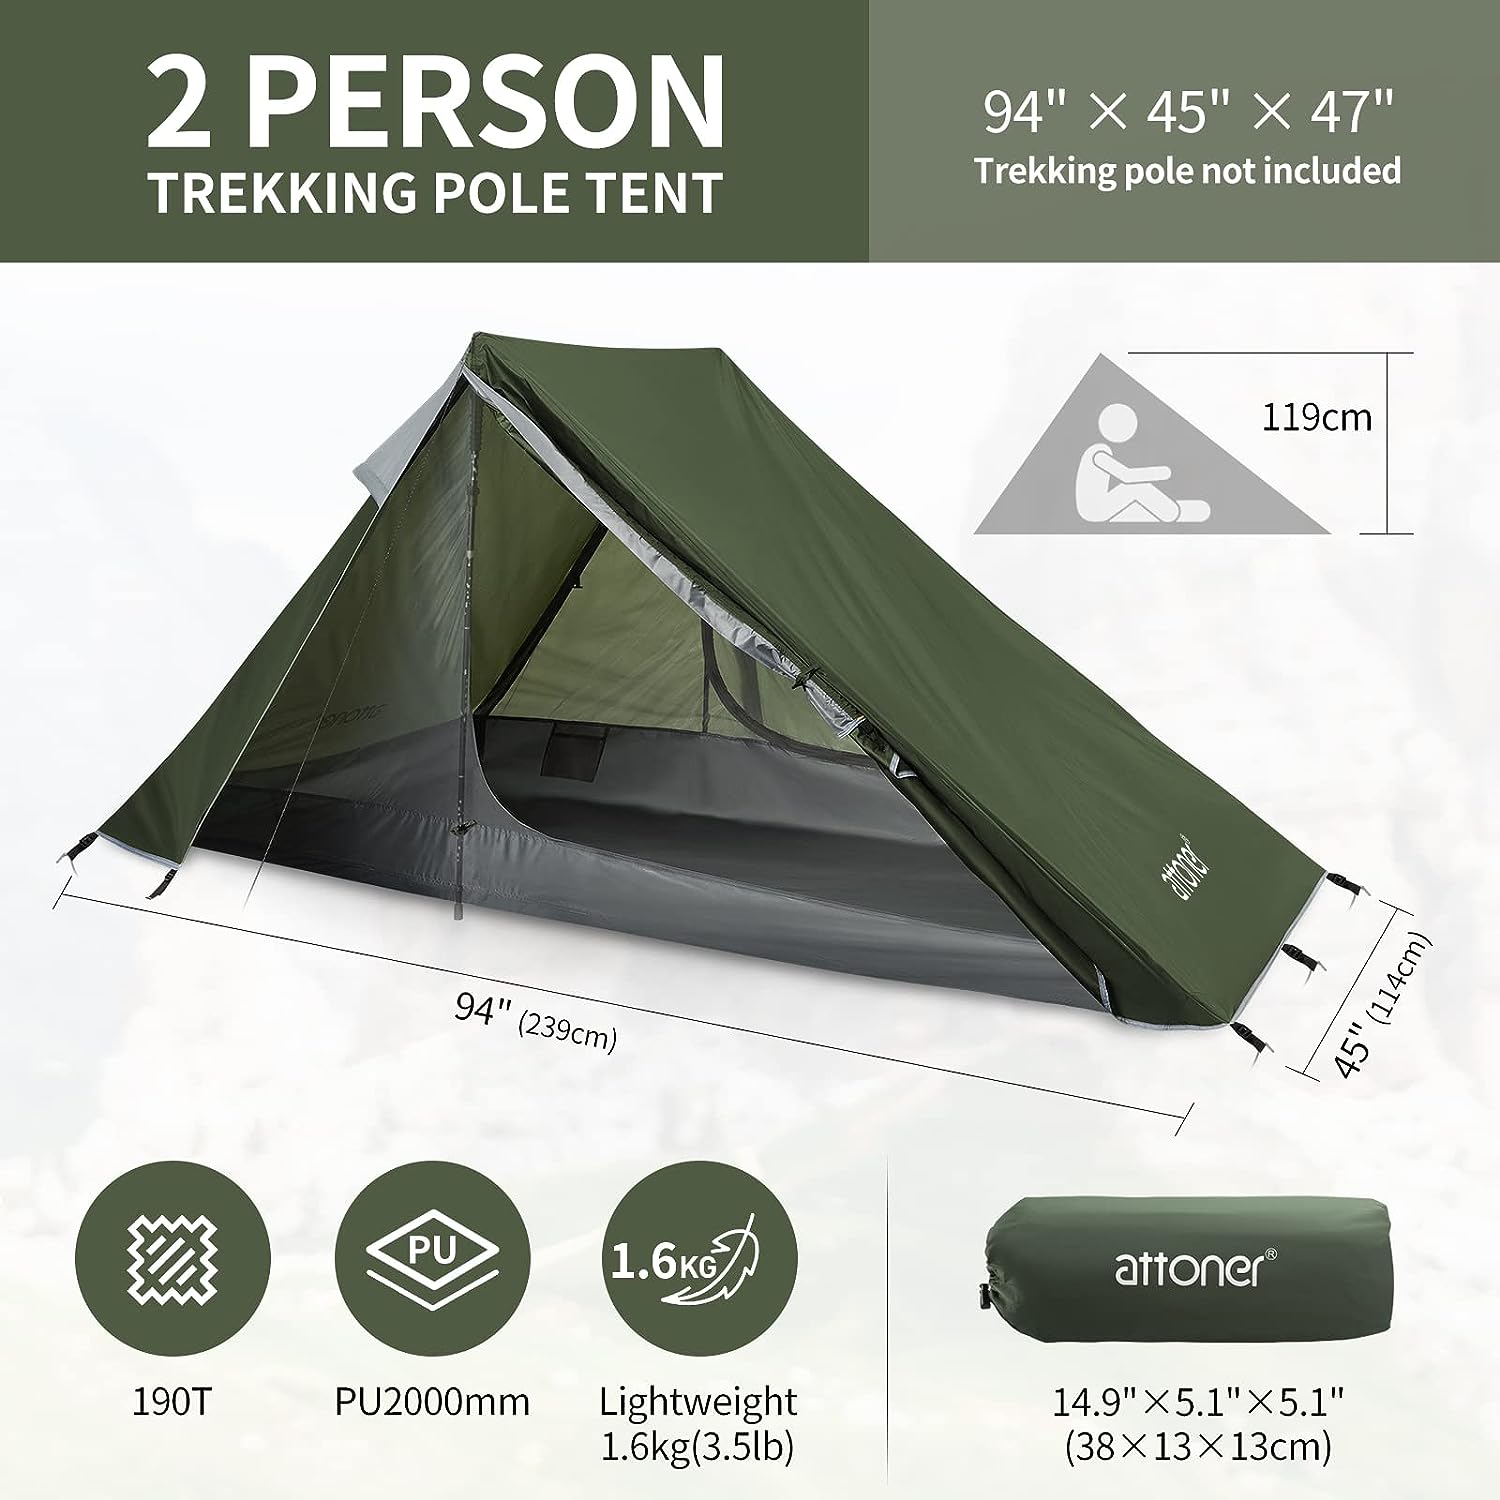 attoner ridge tent green polyester waterproof backpacking tent specs